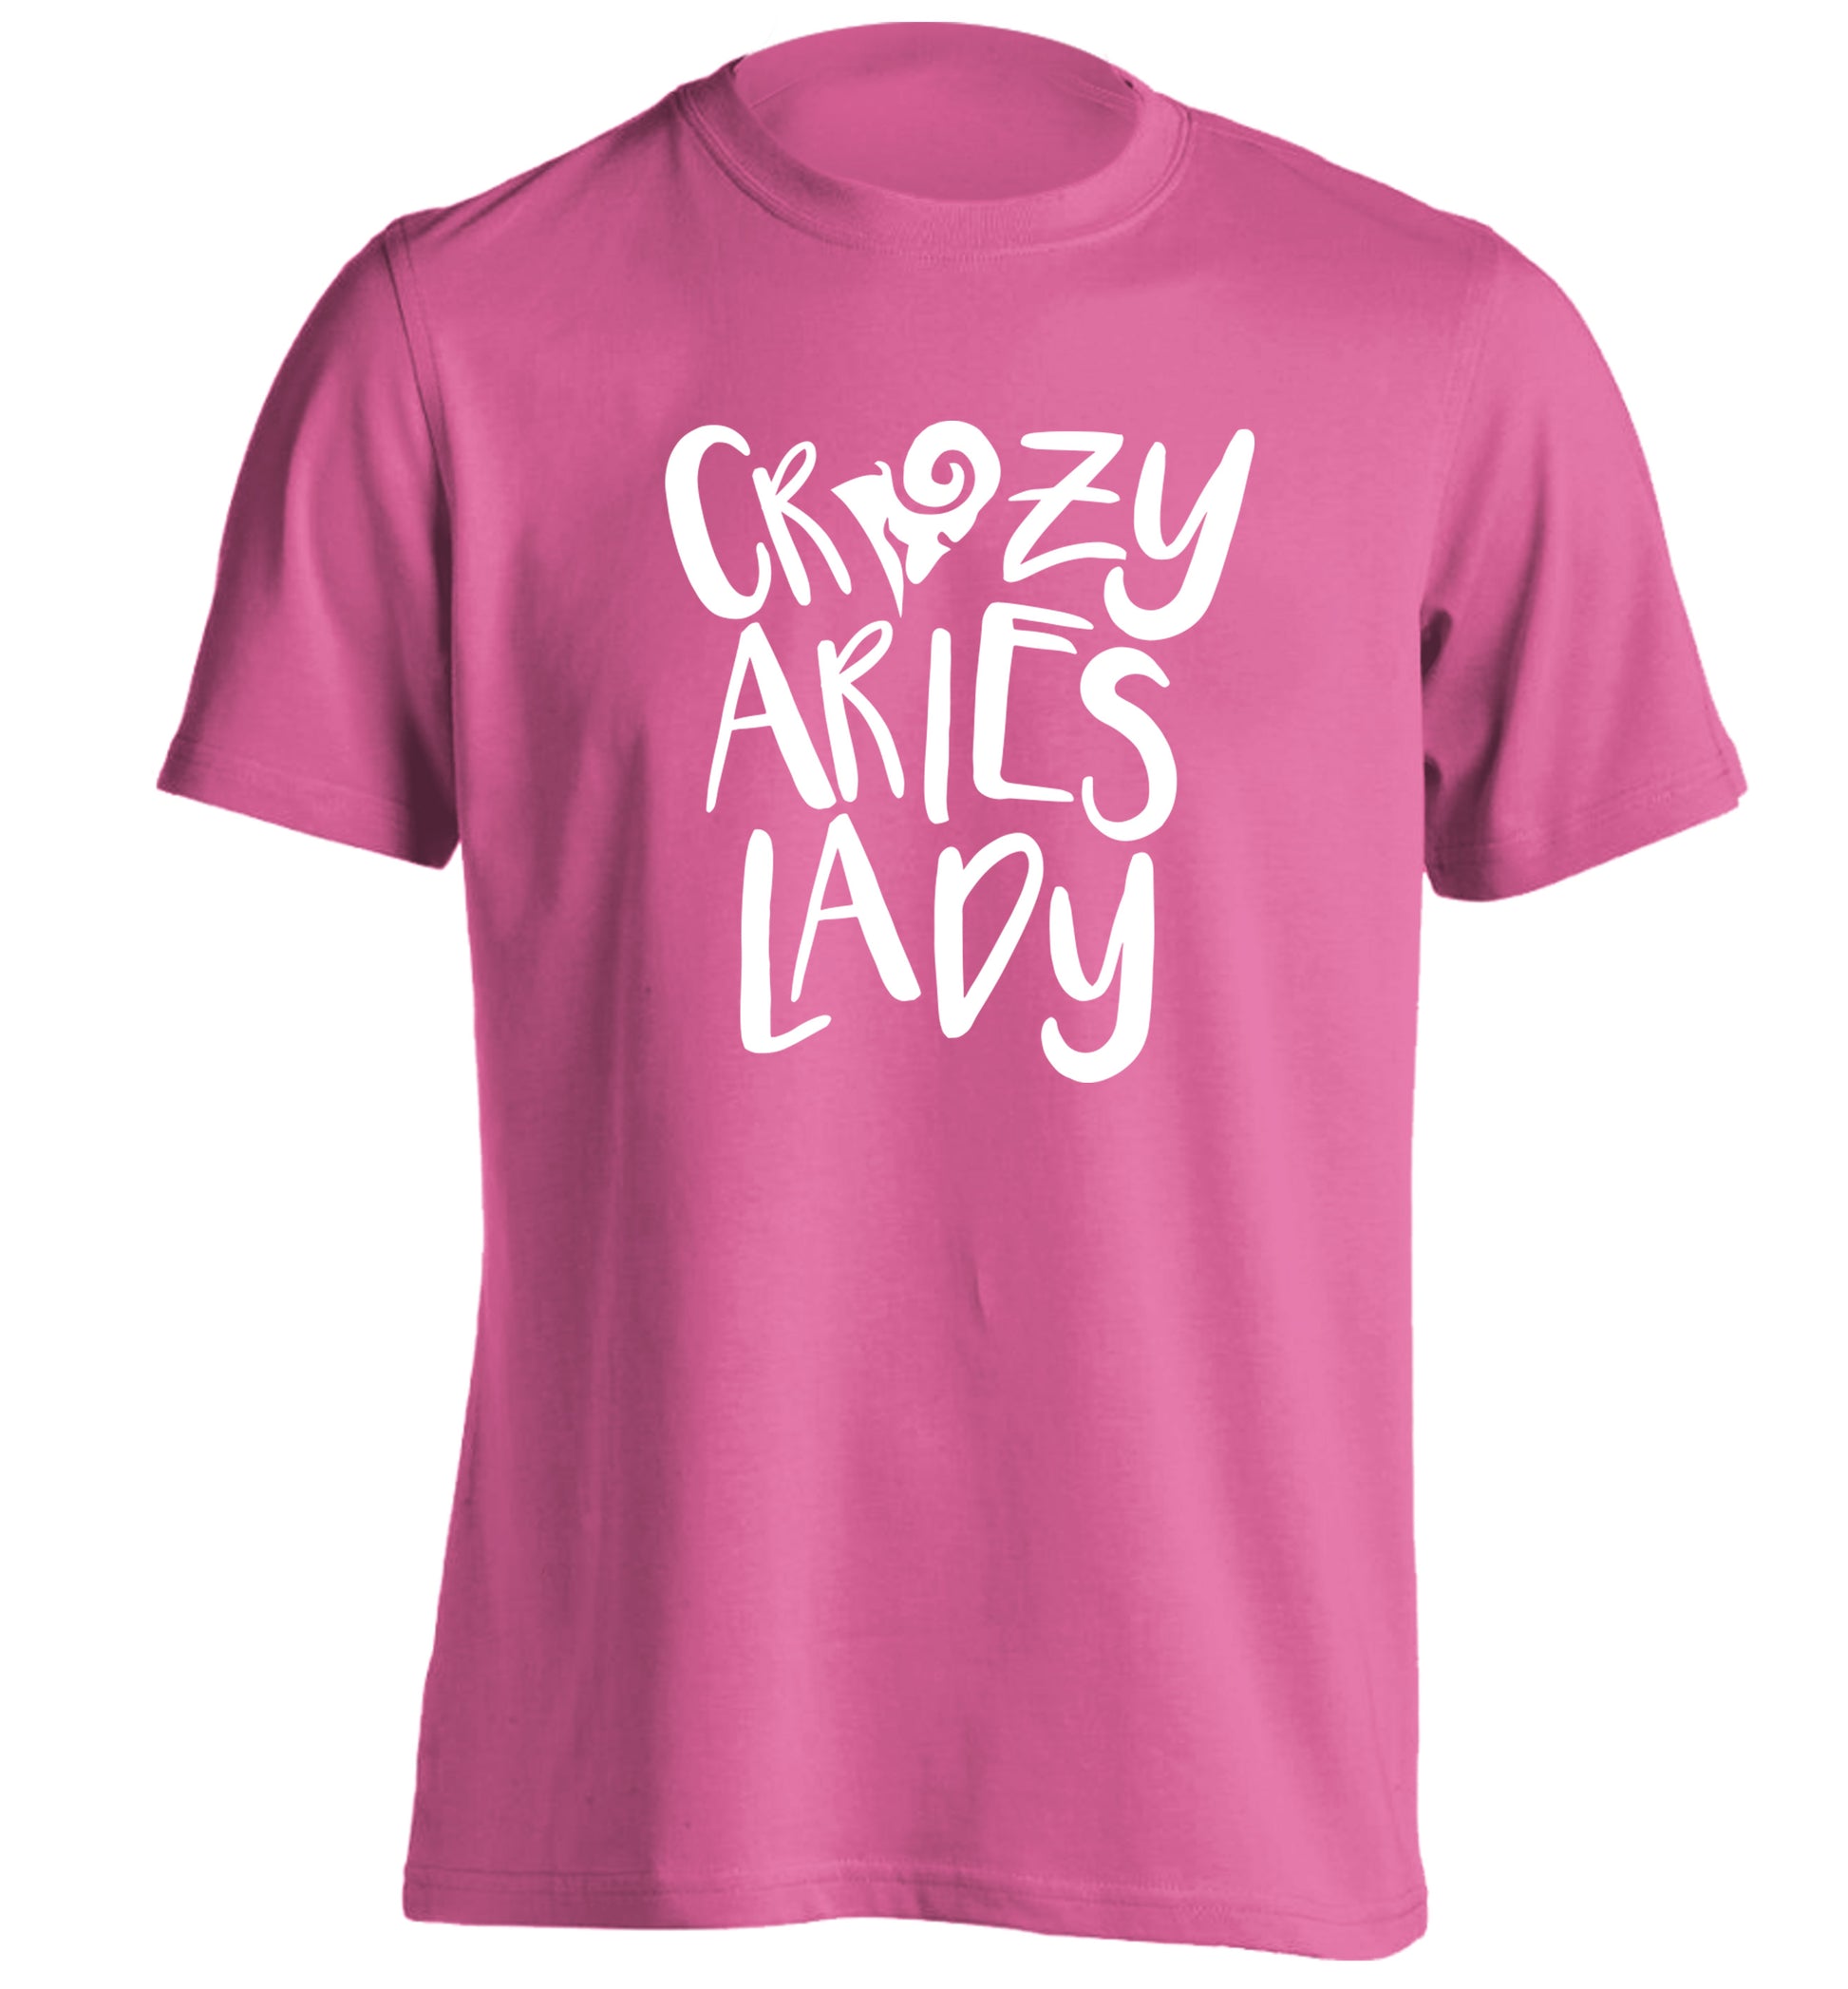 Crazy aries lady adults unisex pink Tshirt 2XL